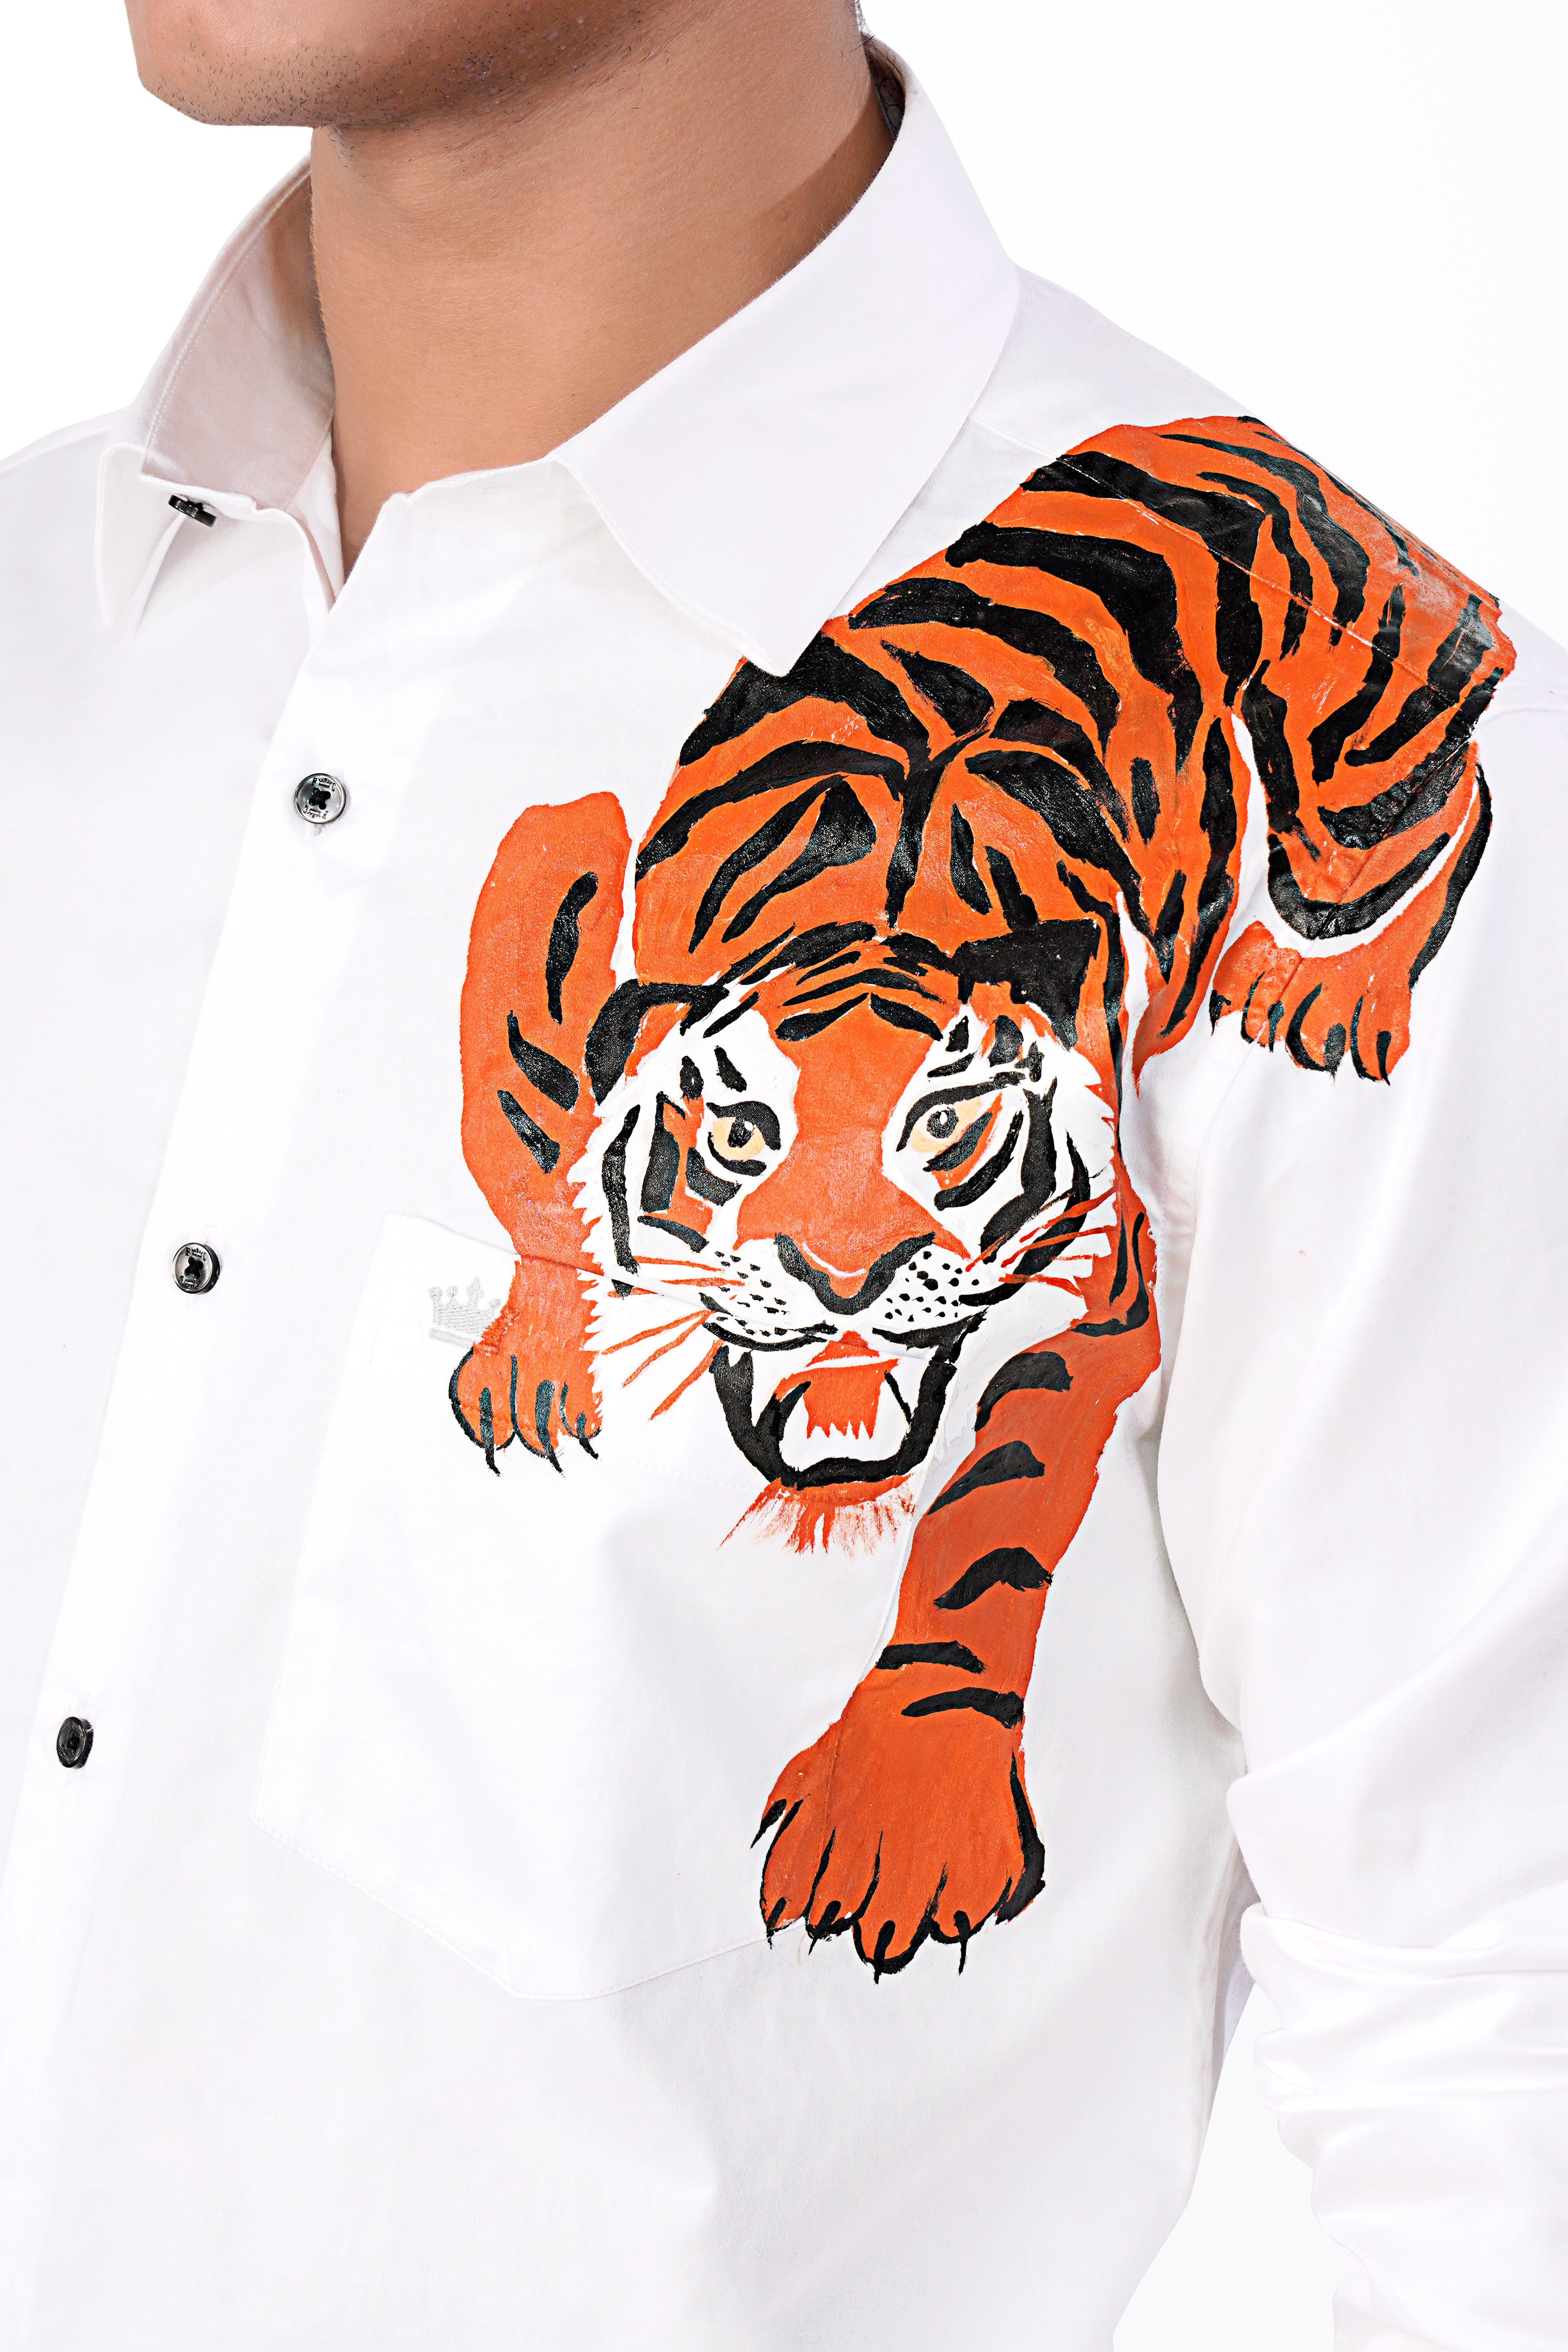 Bright White Tiger Hand Painted Super Soft Premium Cotton Designer Shirt 1062-BLK-ART02-38, 1062-BLK-ART02-H-38, 1062-BLK-ART02-39, 1062-BLK-ART02-H-39, 1062-BLK-ART02-40, 1062-BLK-ART02-H-40, 1062-BLK-ART02-42, 1062-BLK-ART02-H-42, 1062-BLK-ART02-44, 1062-BLK-ART02-H-44, 1062-BLK-ART02-46, 1062-BLK-ART02-H-46, 1062-BLK-ART02-48, 1062-BLK-ART02-H-48, 1062-BLK-ART02-50, 1062-BLK-ART02-H-50, 1062-BLK-ART02-52, 1062-BLK-ART02-H-52